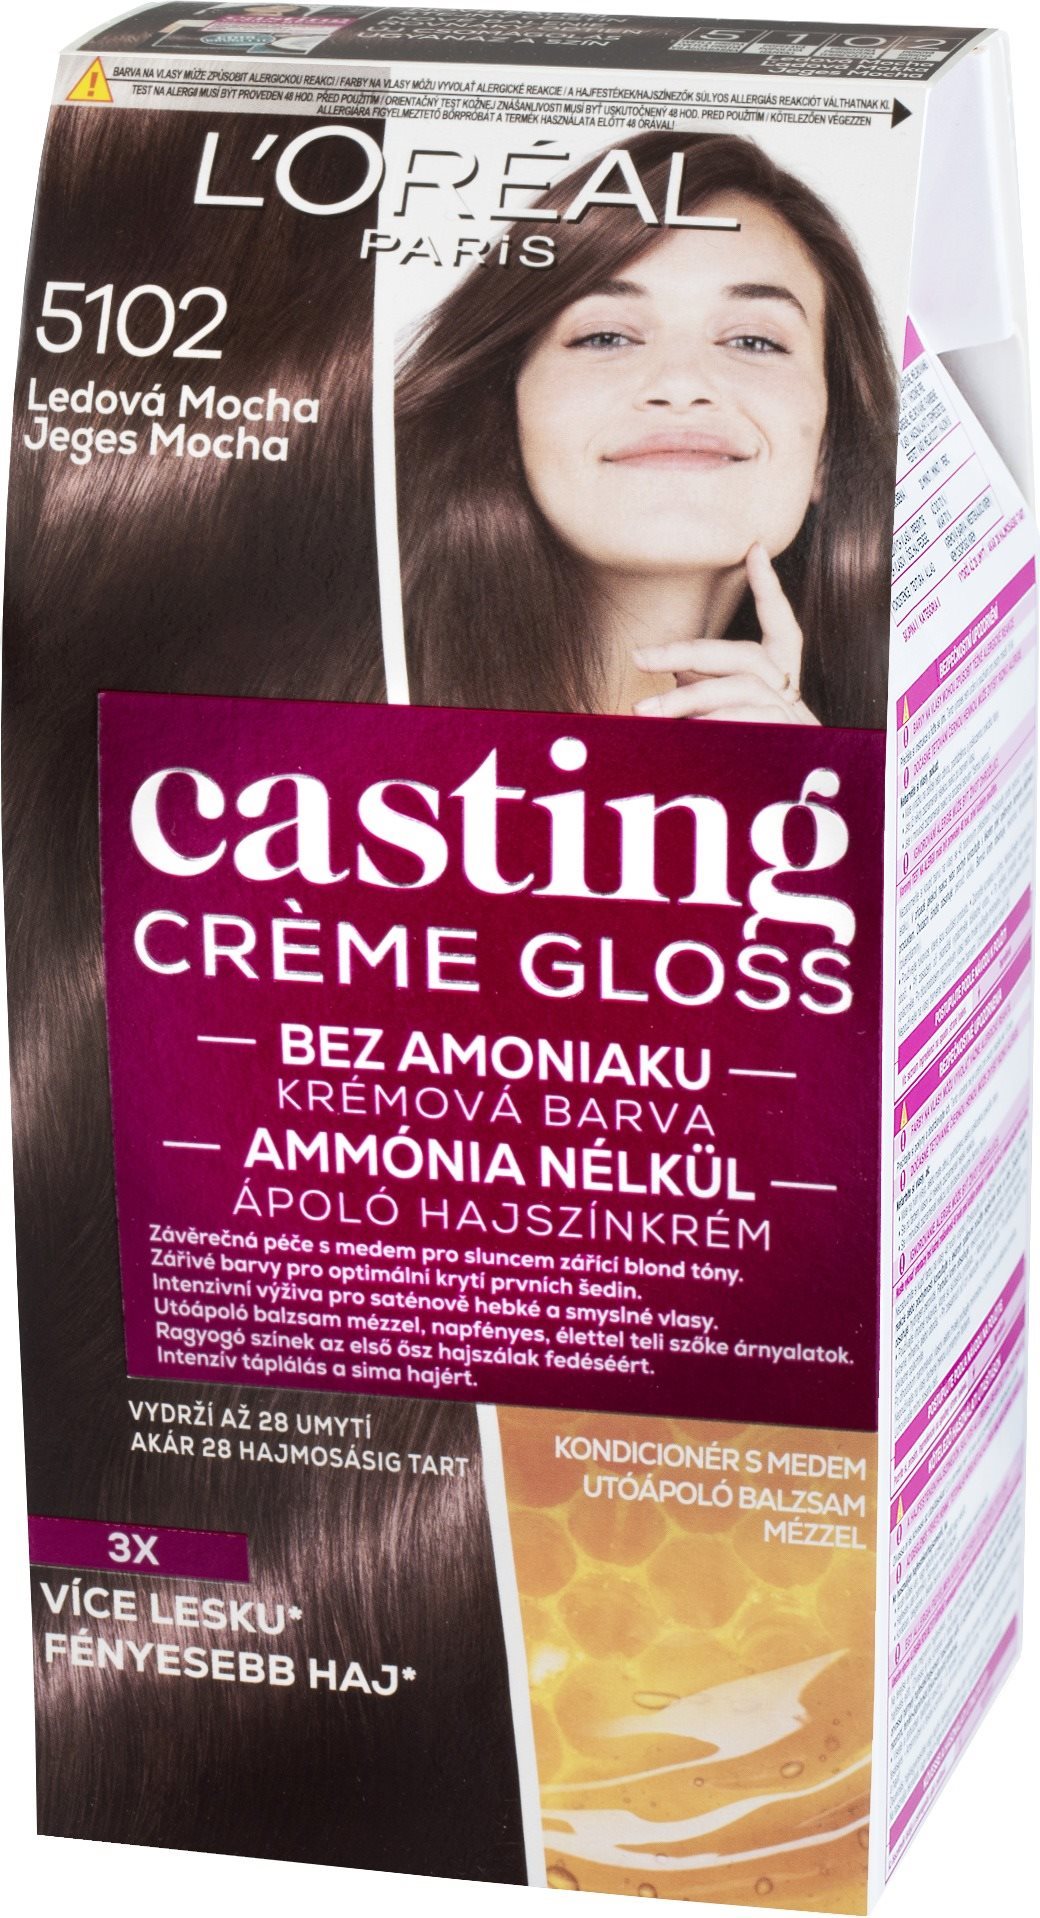 ĽORÉAL CASTING Creme Gloss 510 Jeges mocha 180 ml